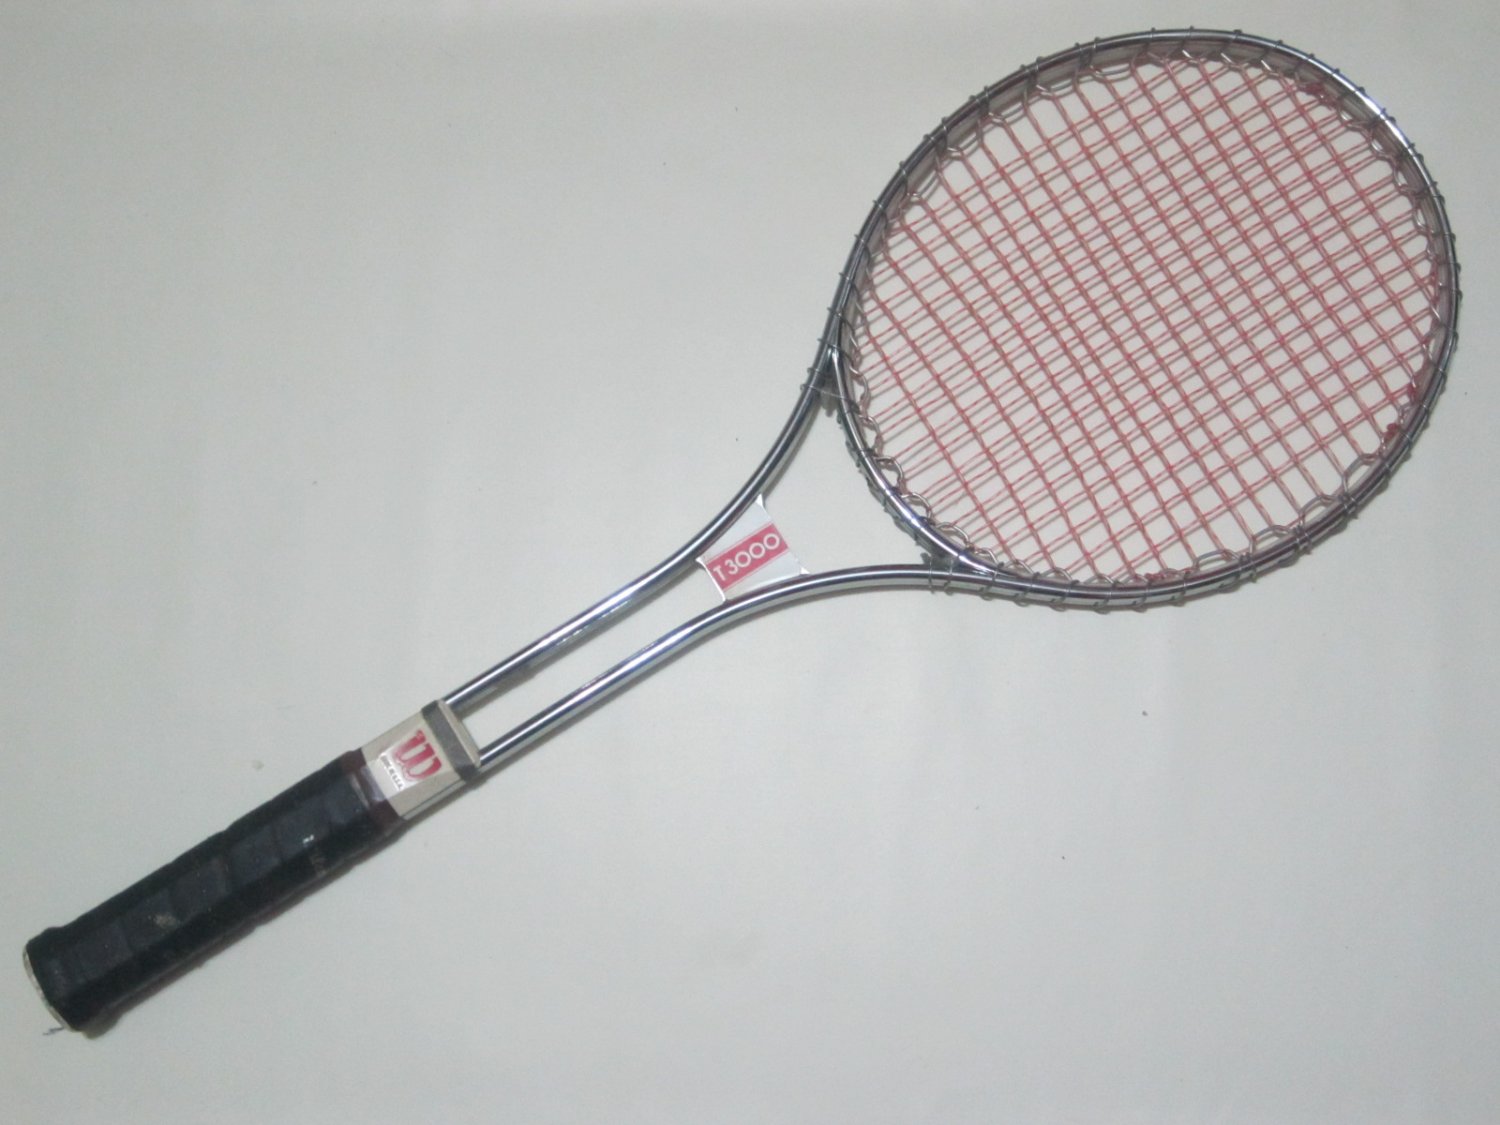 Wilson T3000 Tennis Racquet for sale online